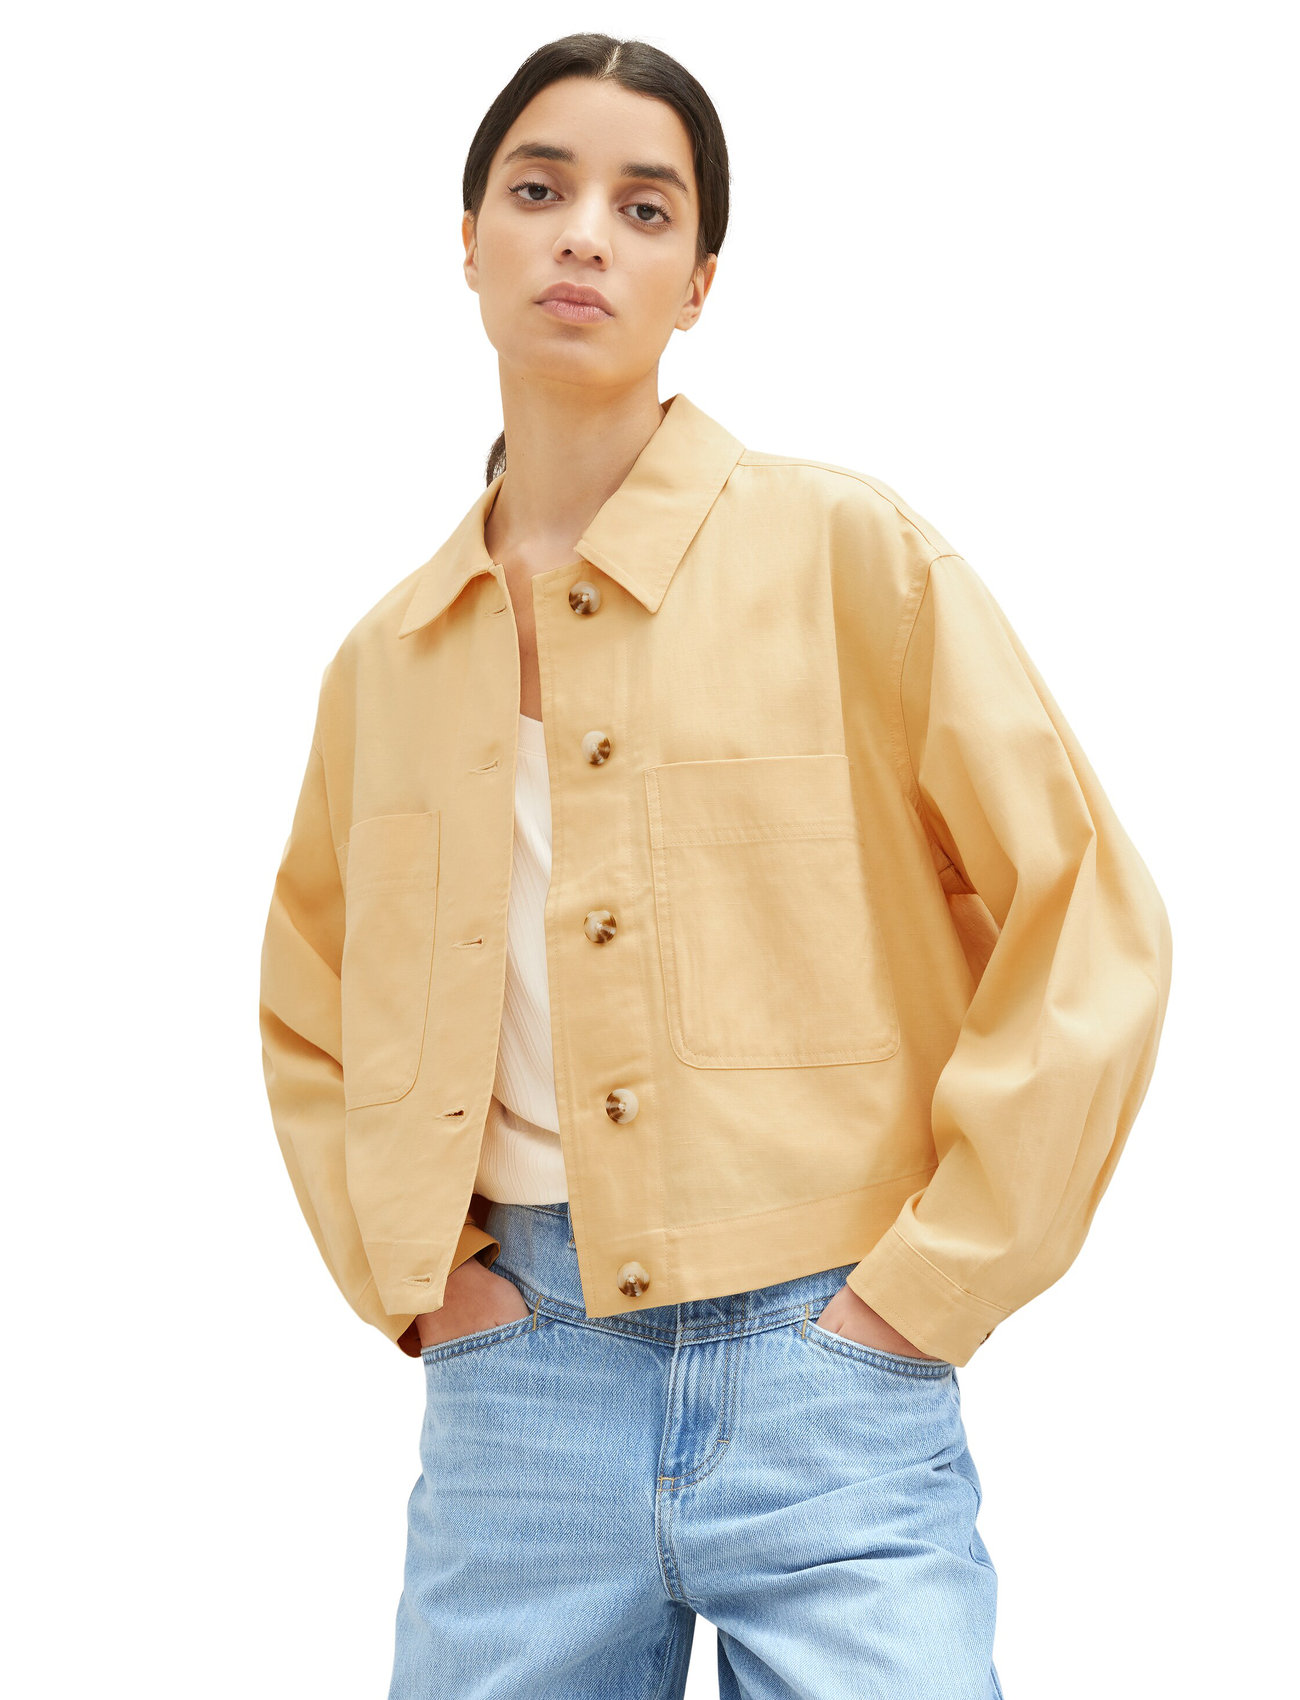 Tom Tailor - loose fit blazer jacket - spring jackets - fawn beige - 1